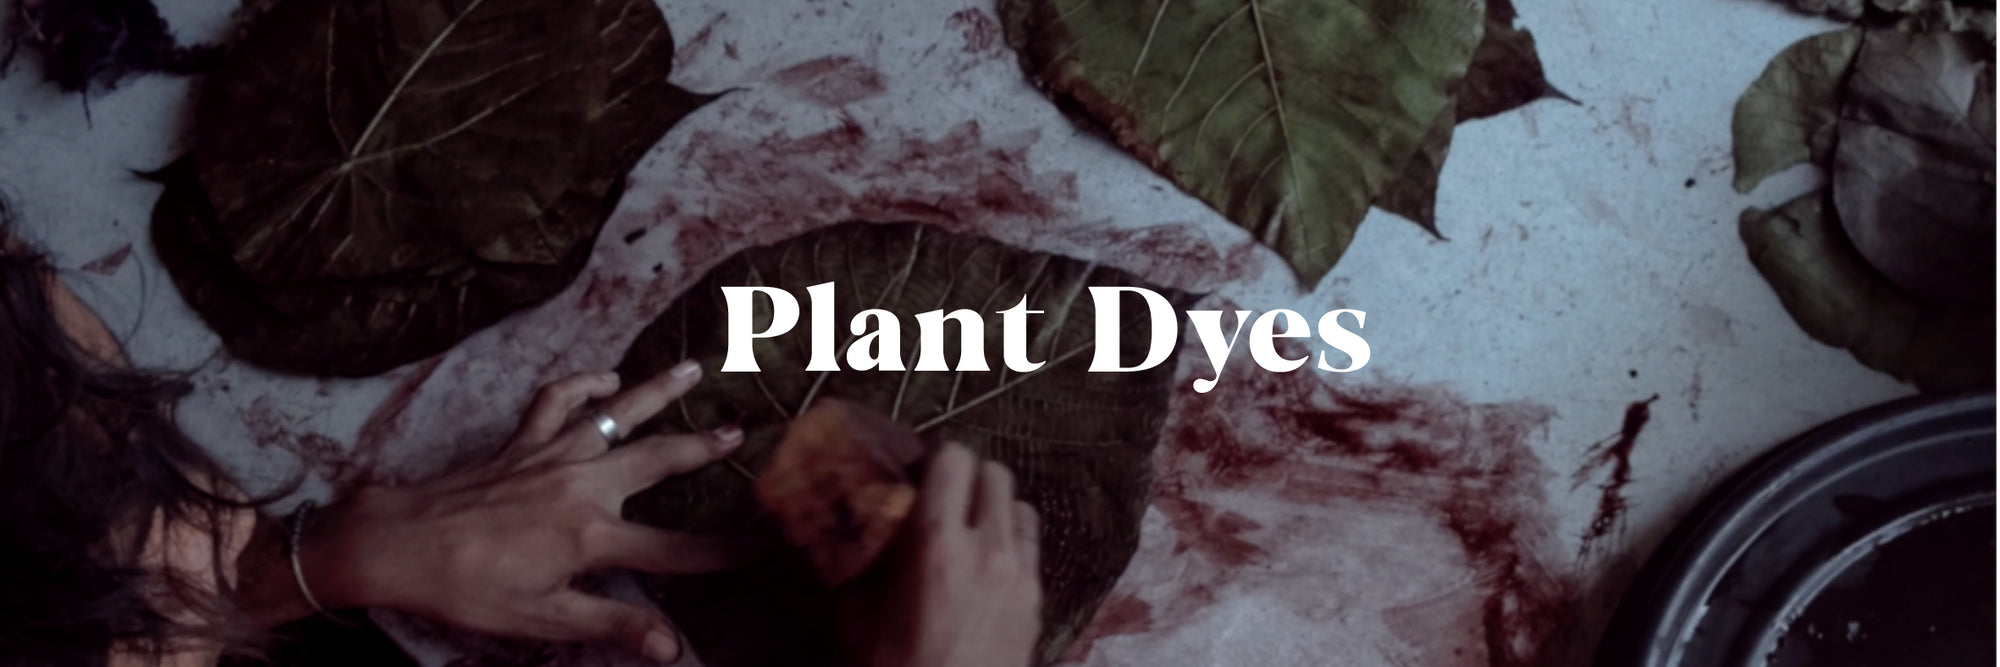 Luna & Rose use Organic Plant Dyes